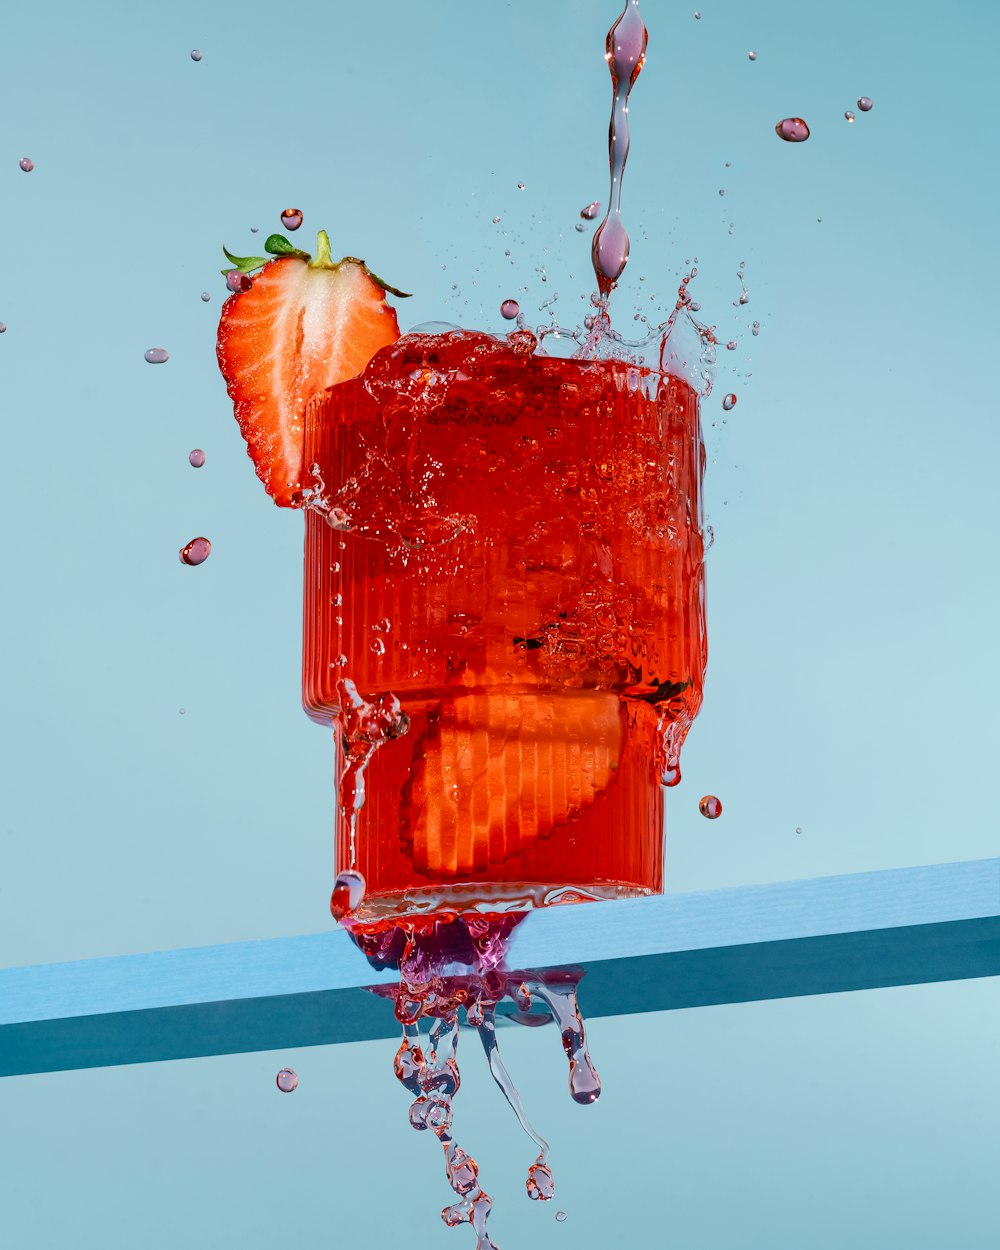 a strawberry splashing into water